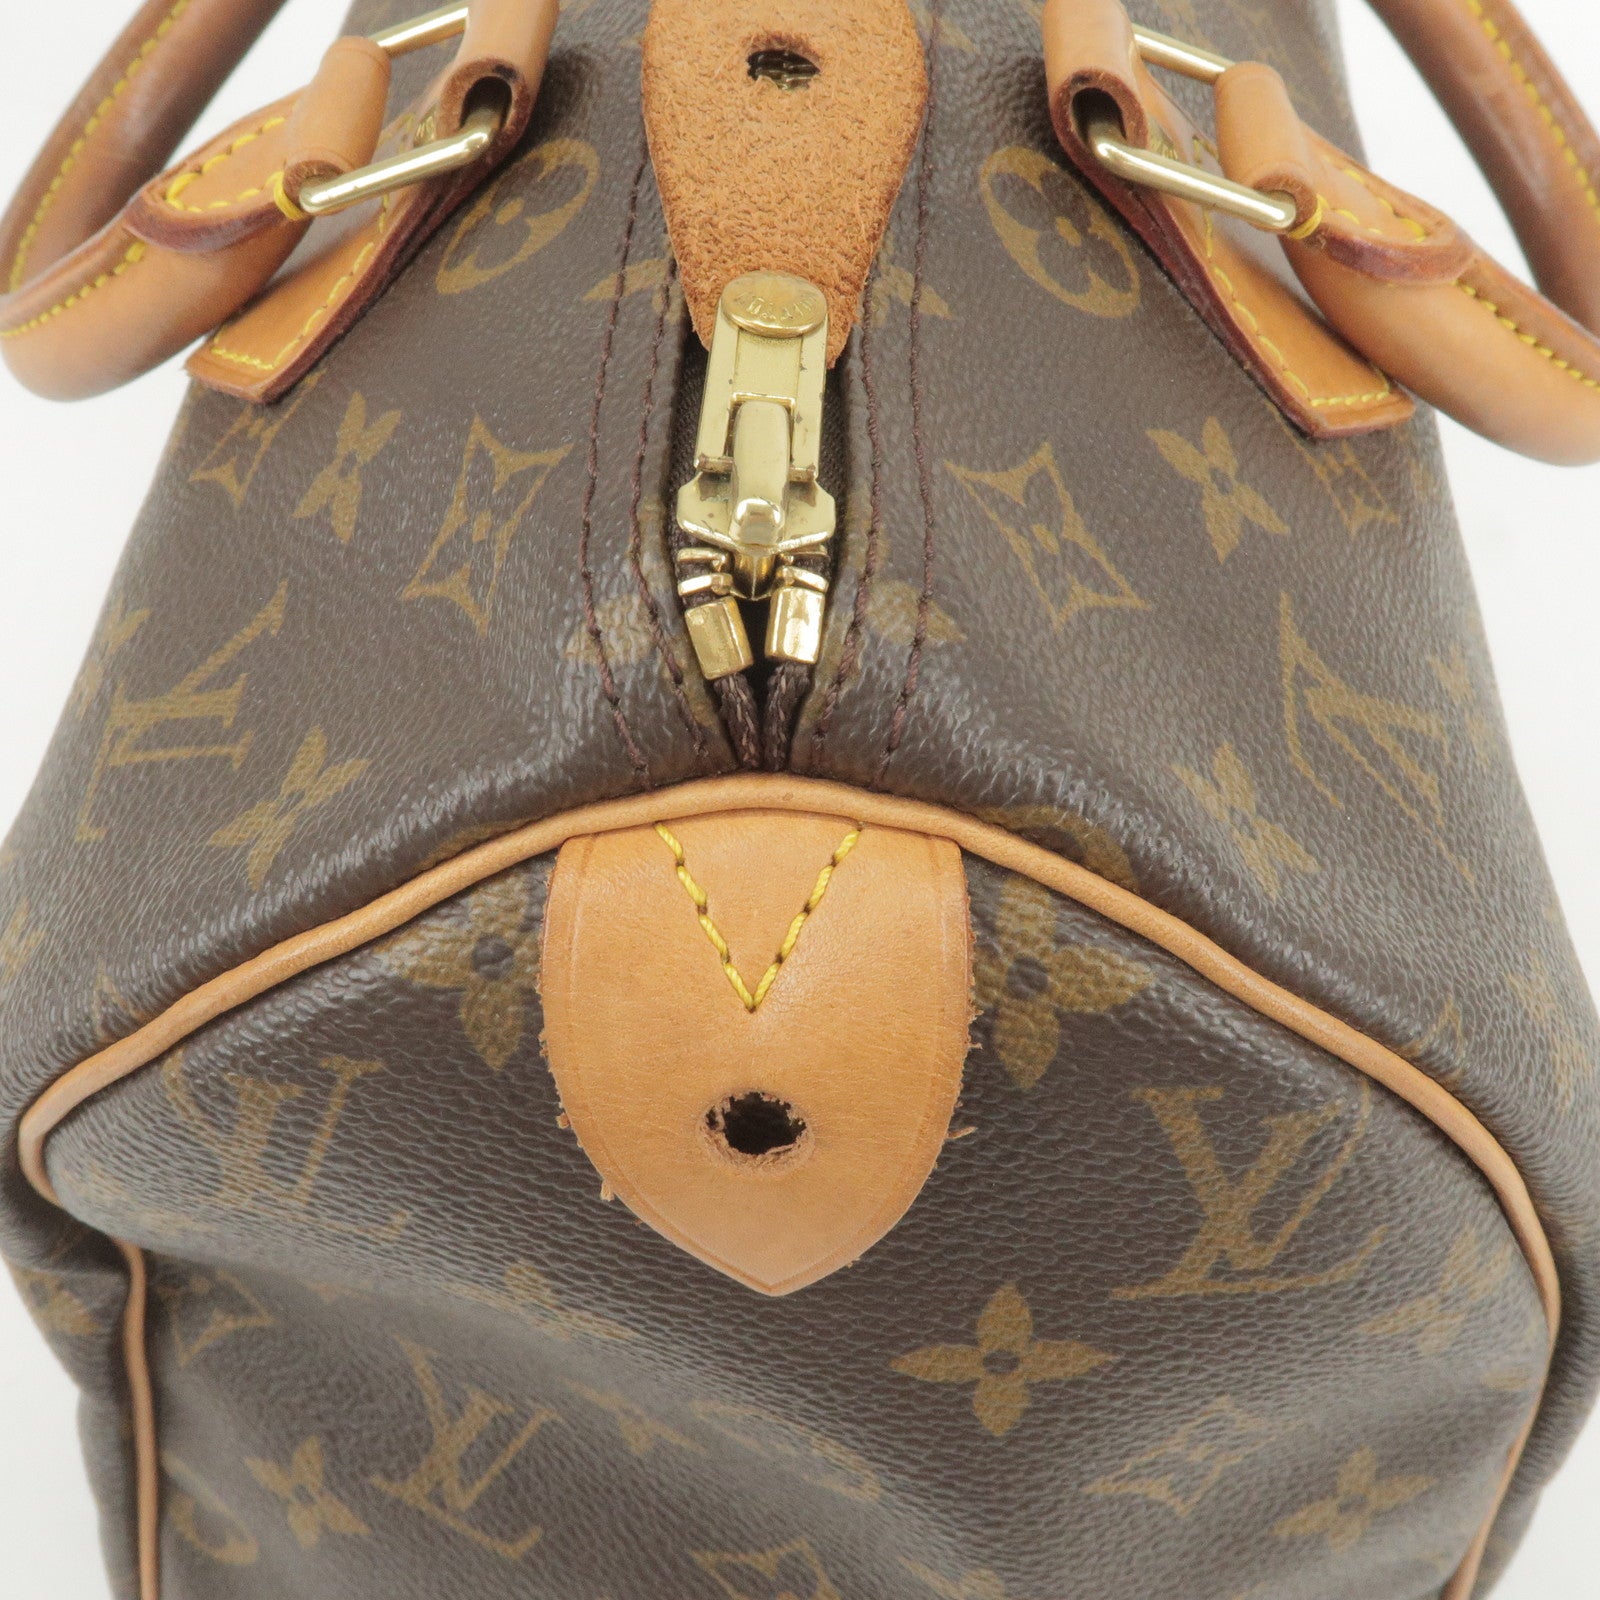 Japan Use Bolsos De Segunda Mano Leather Bag Used Handbags